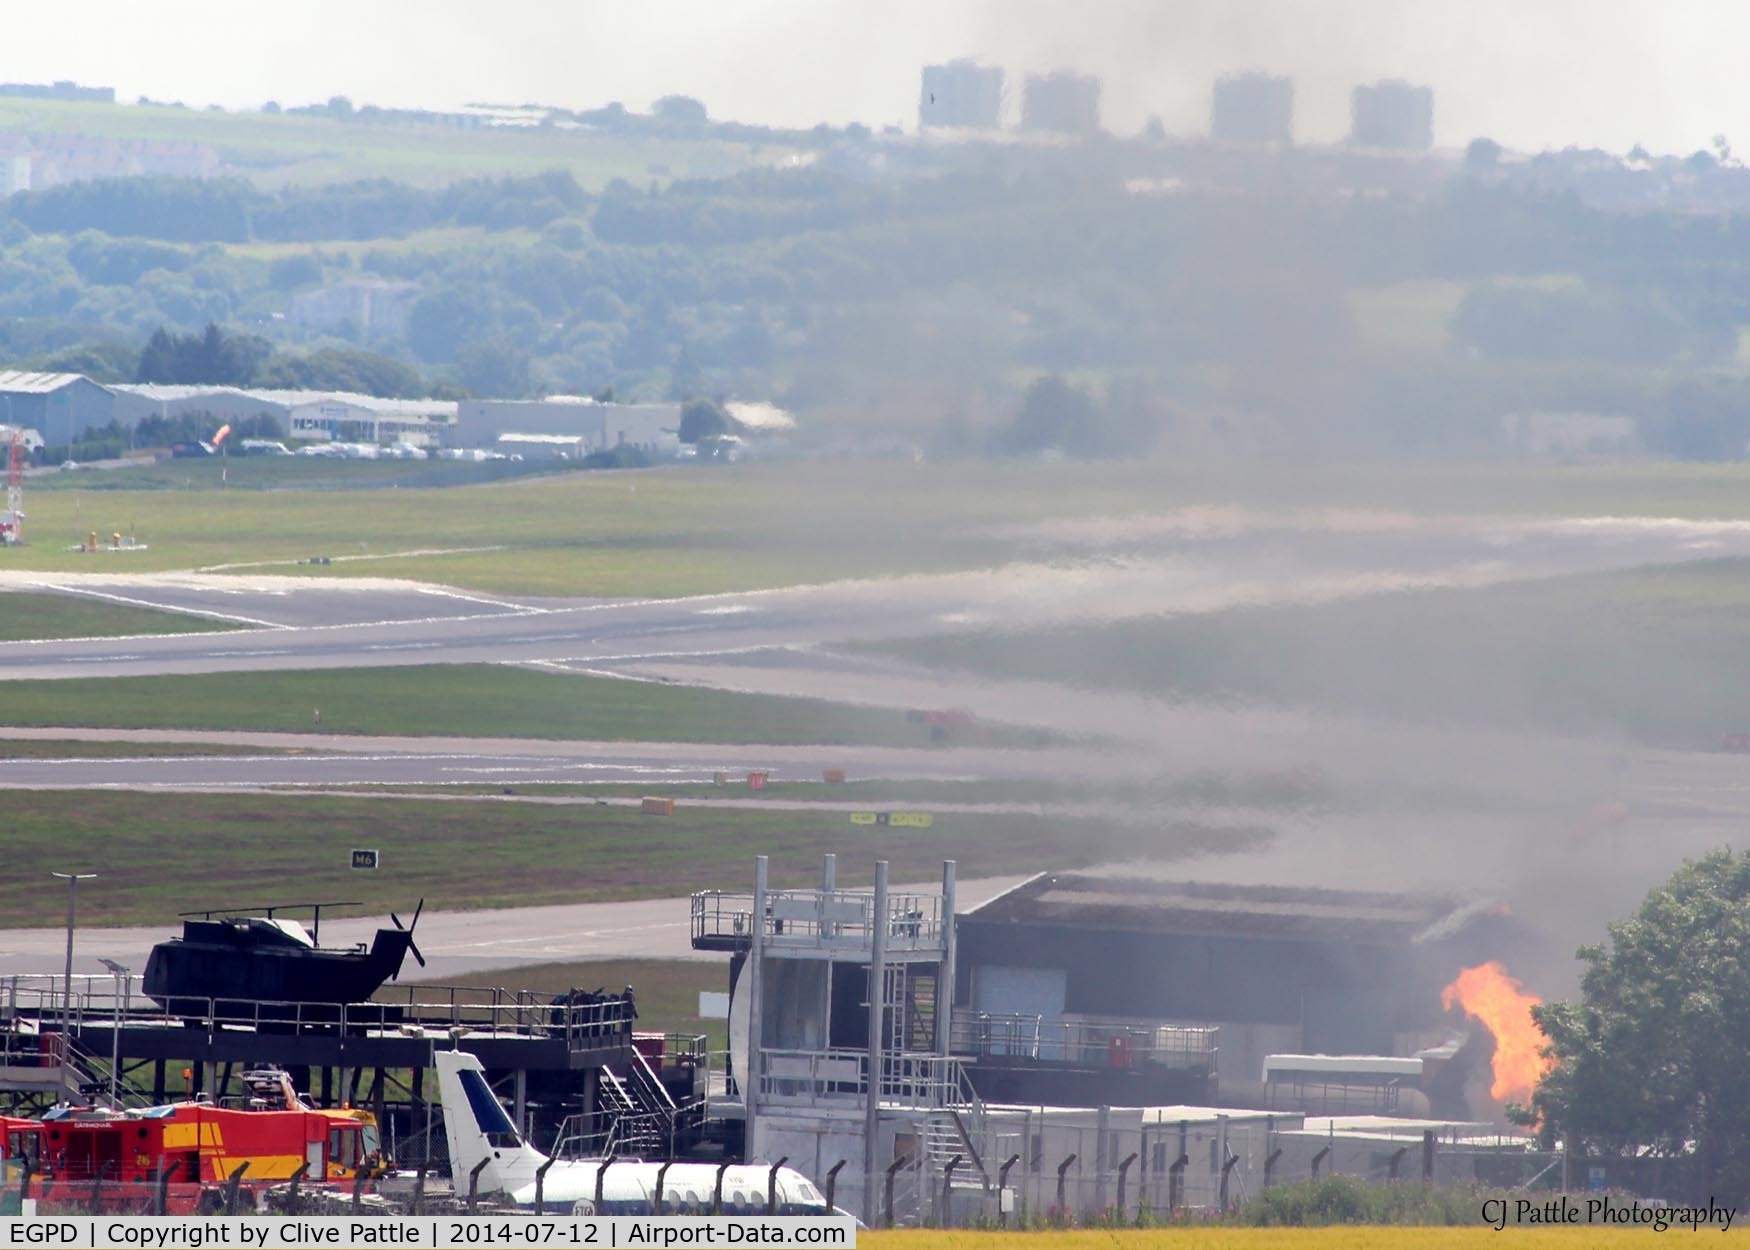 Aberdeen Airport, Aberdeen, Scotland United Kingdom (EGPD) - Fire action in the Training Area at Aberdeen EGPD